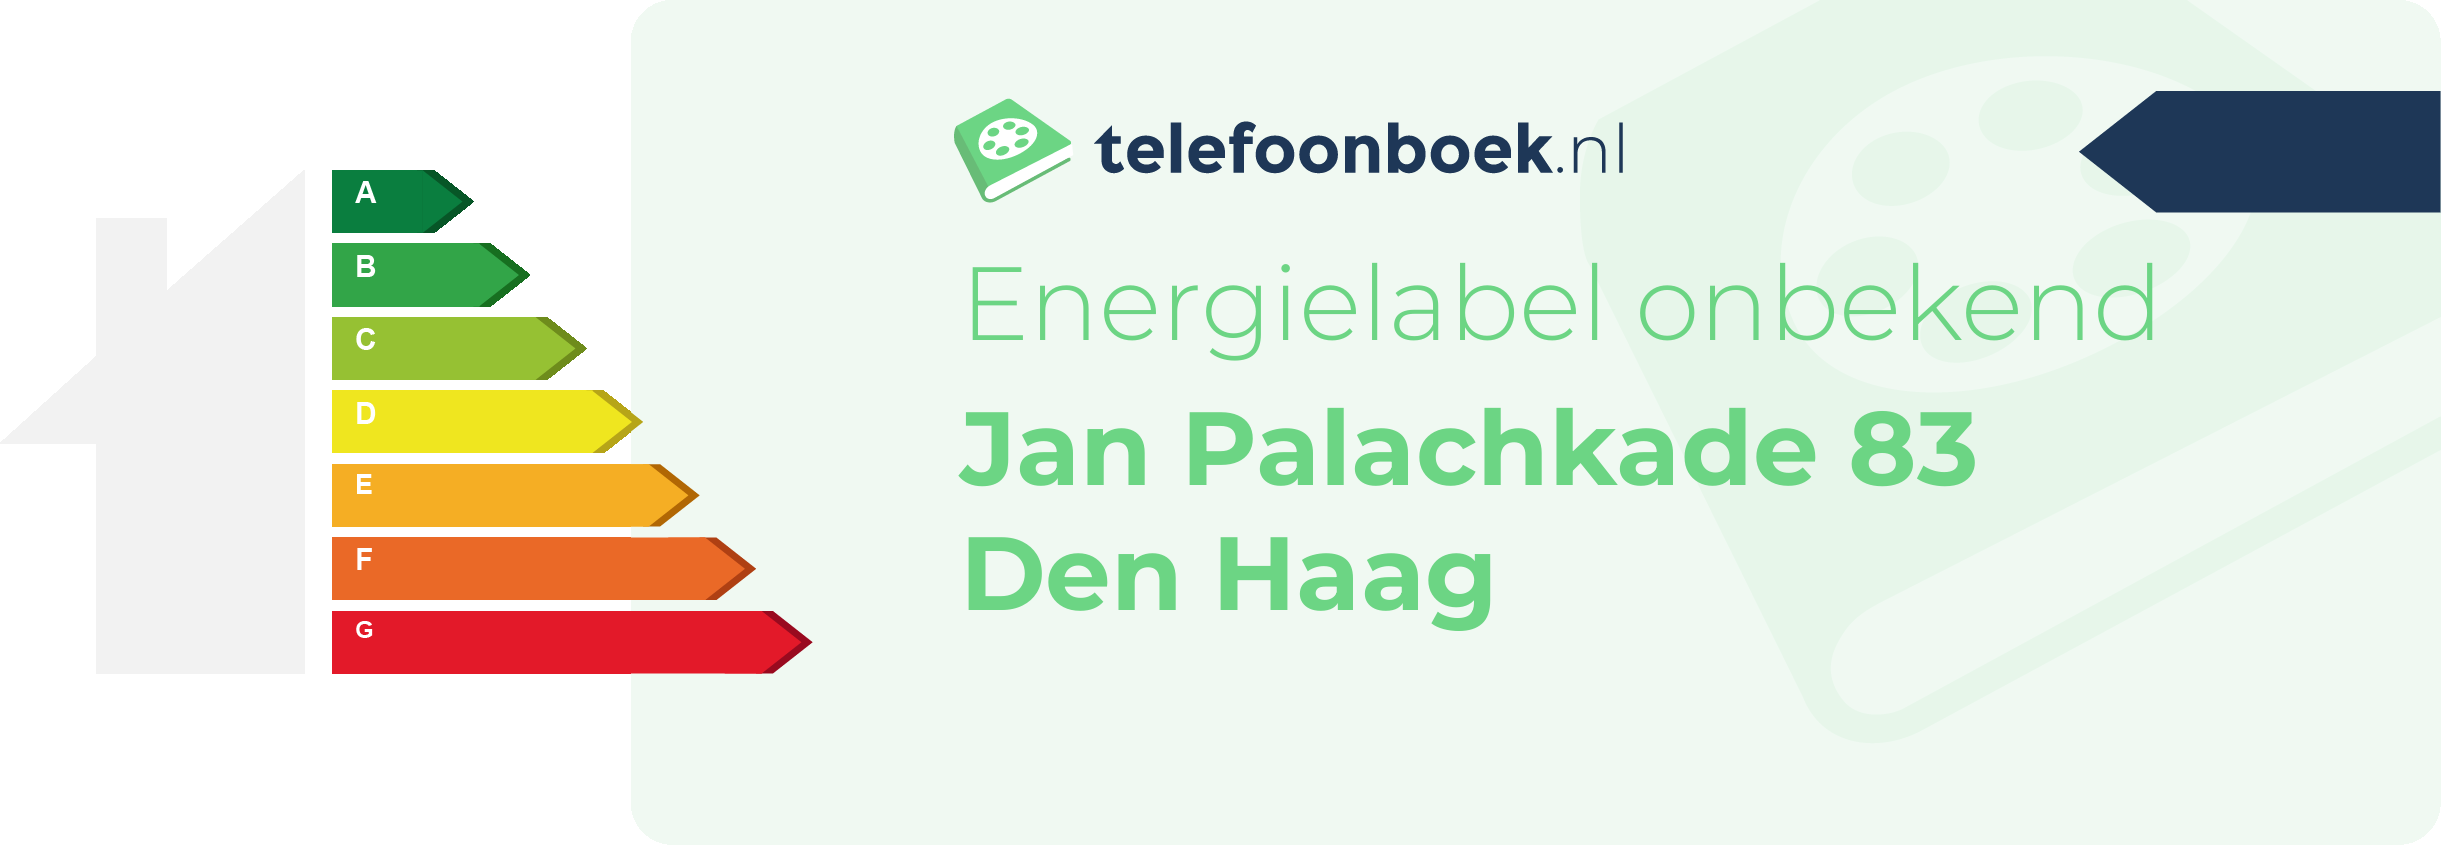 Energielabel Jan Palachkade 83 Den Haag